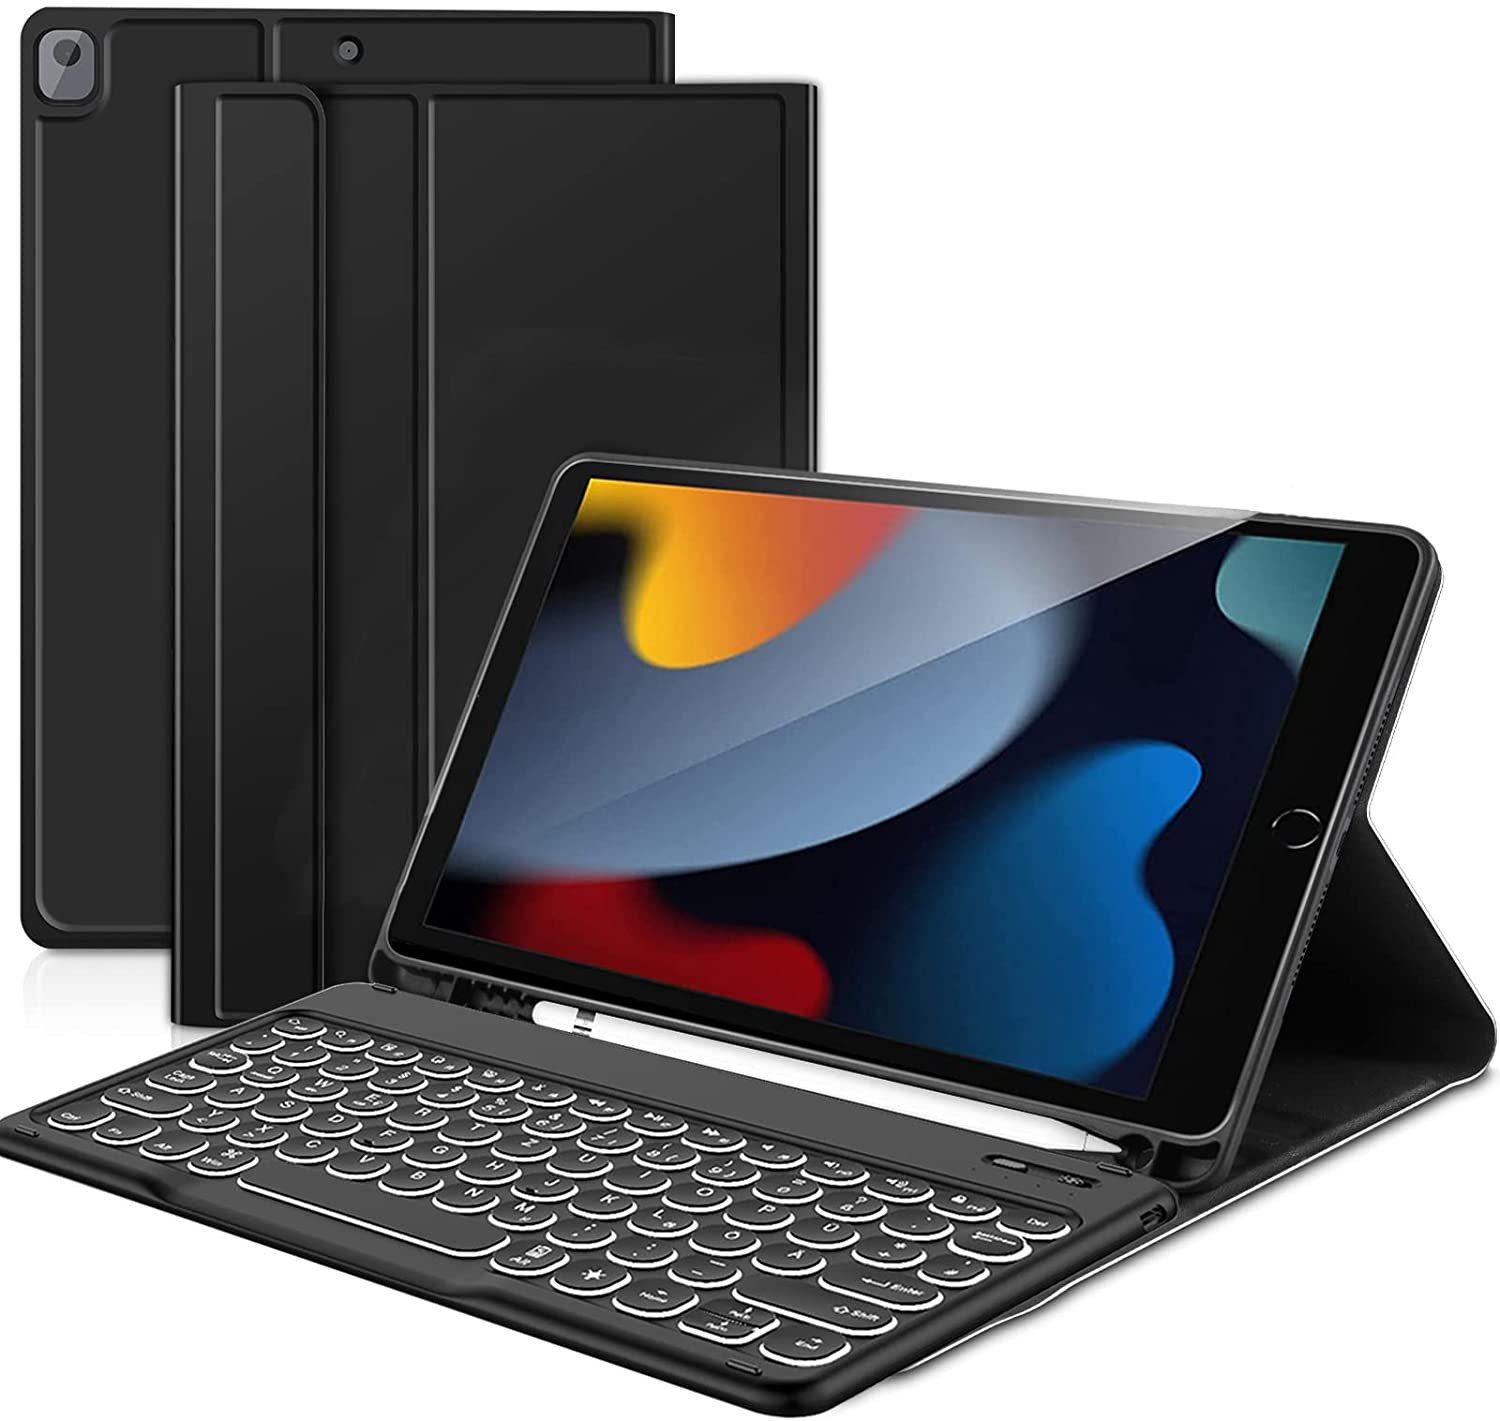 IVSO »Tastatur für iPad 10,2, QWERTZ Beleuchtete Tastatur Hülle für iPad  9./8./7. Generation (iPad 2021/2020/2019), iPad Air 3, iPad Pro 10,5 Zoll  Tastatur Hülle, Schwarz« iPad-Tastatur